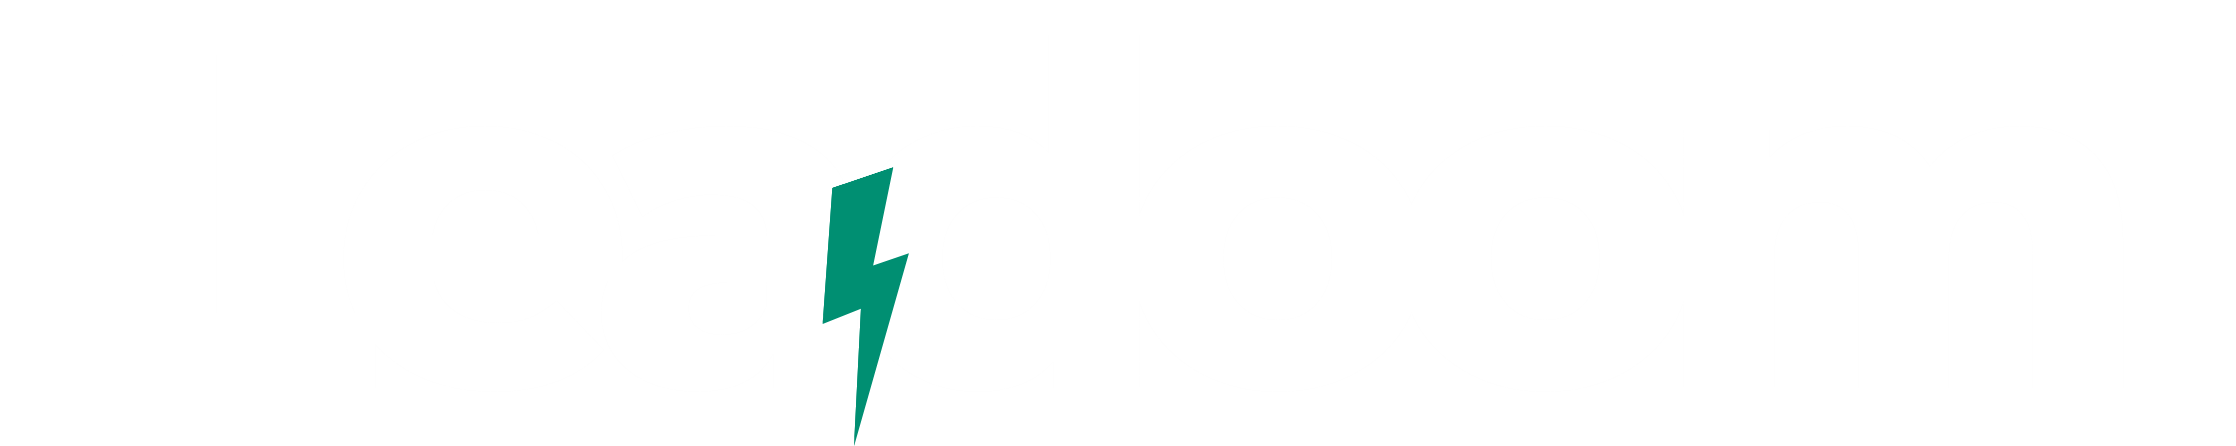 leadoom logo